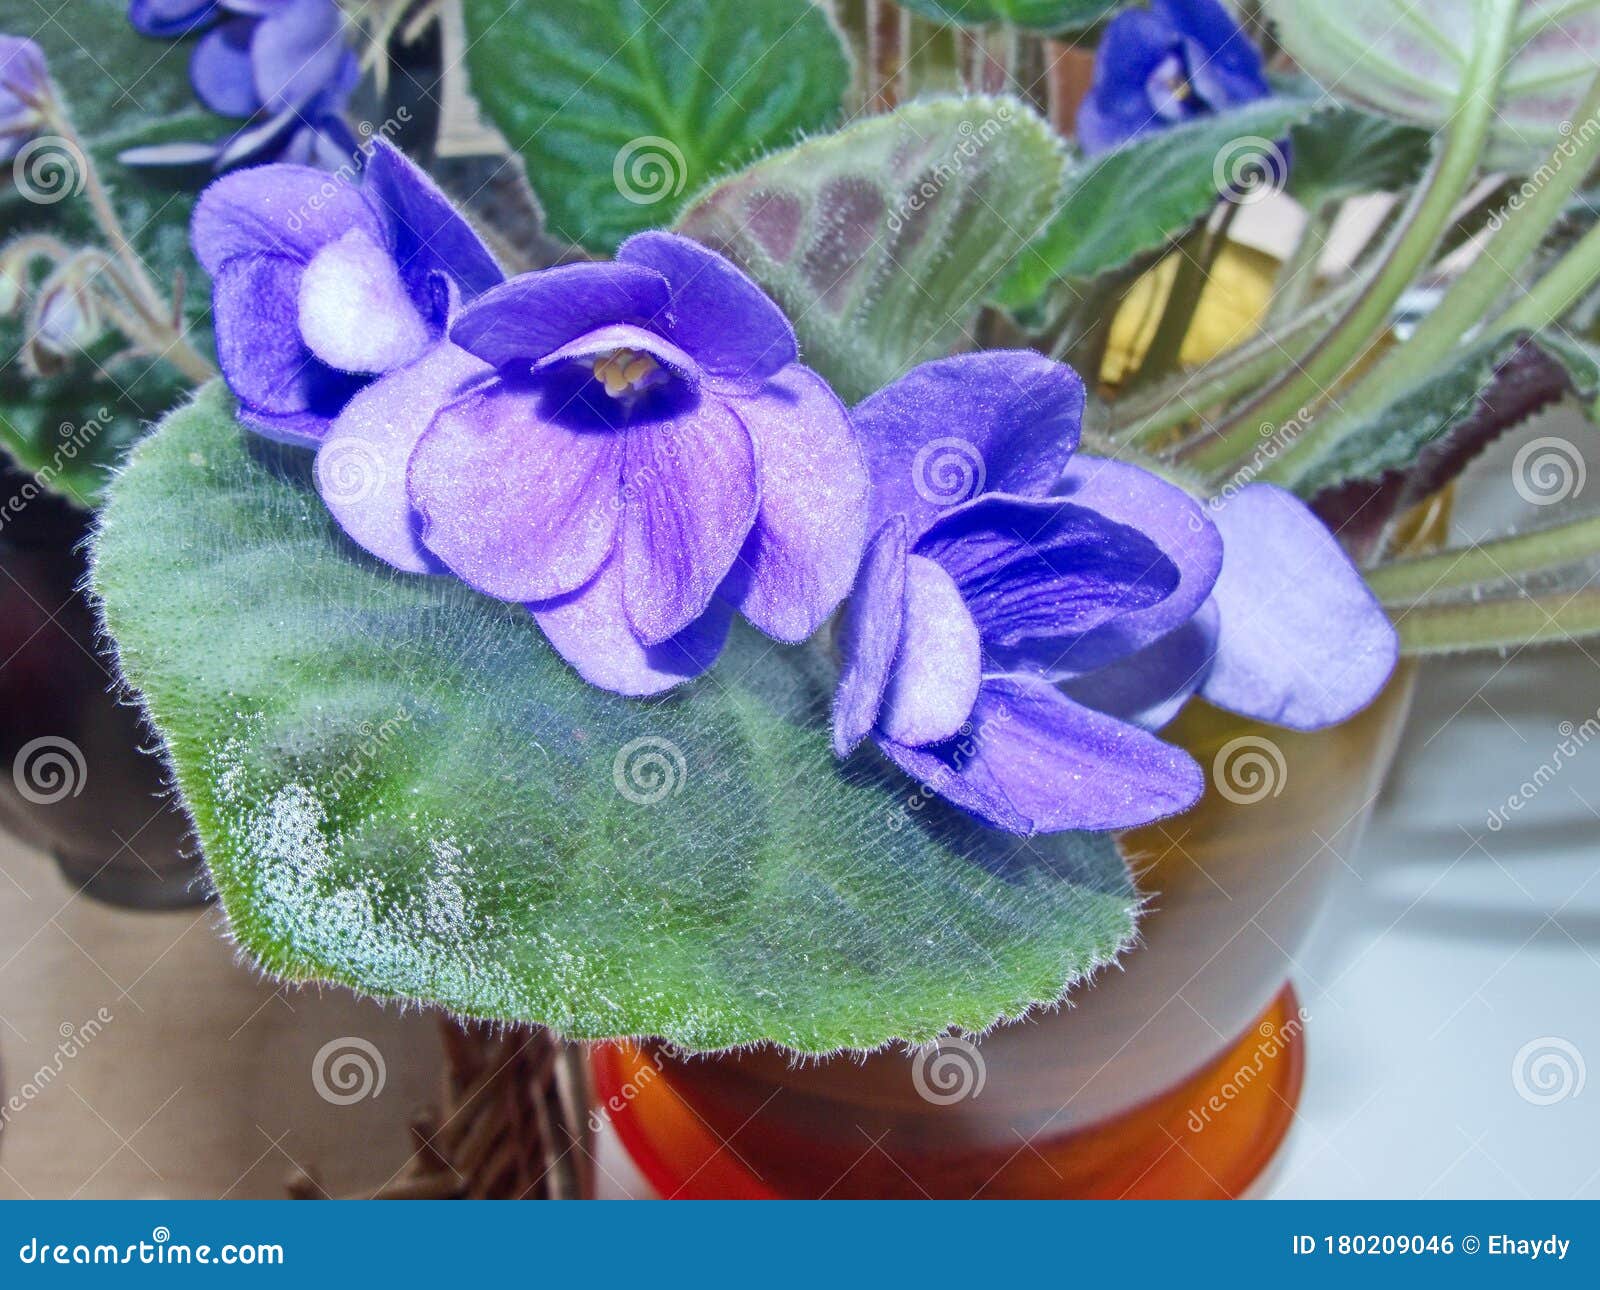 flowers violets `shirlÃ¢â¬â¢s purple passion`. flower stalks are strong and high, in  correspond to pansies